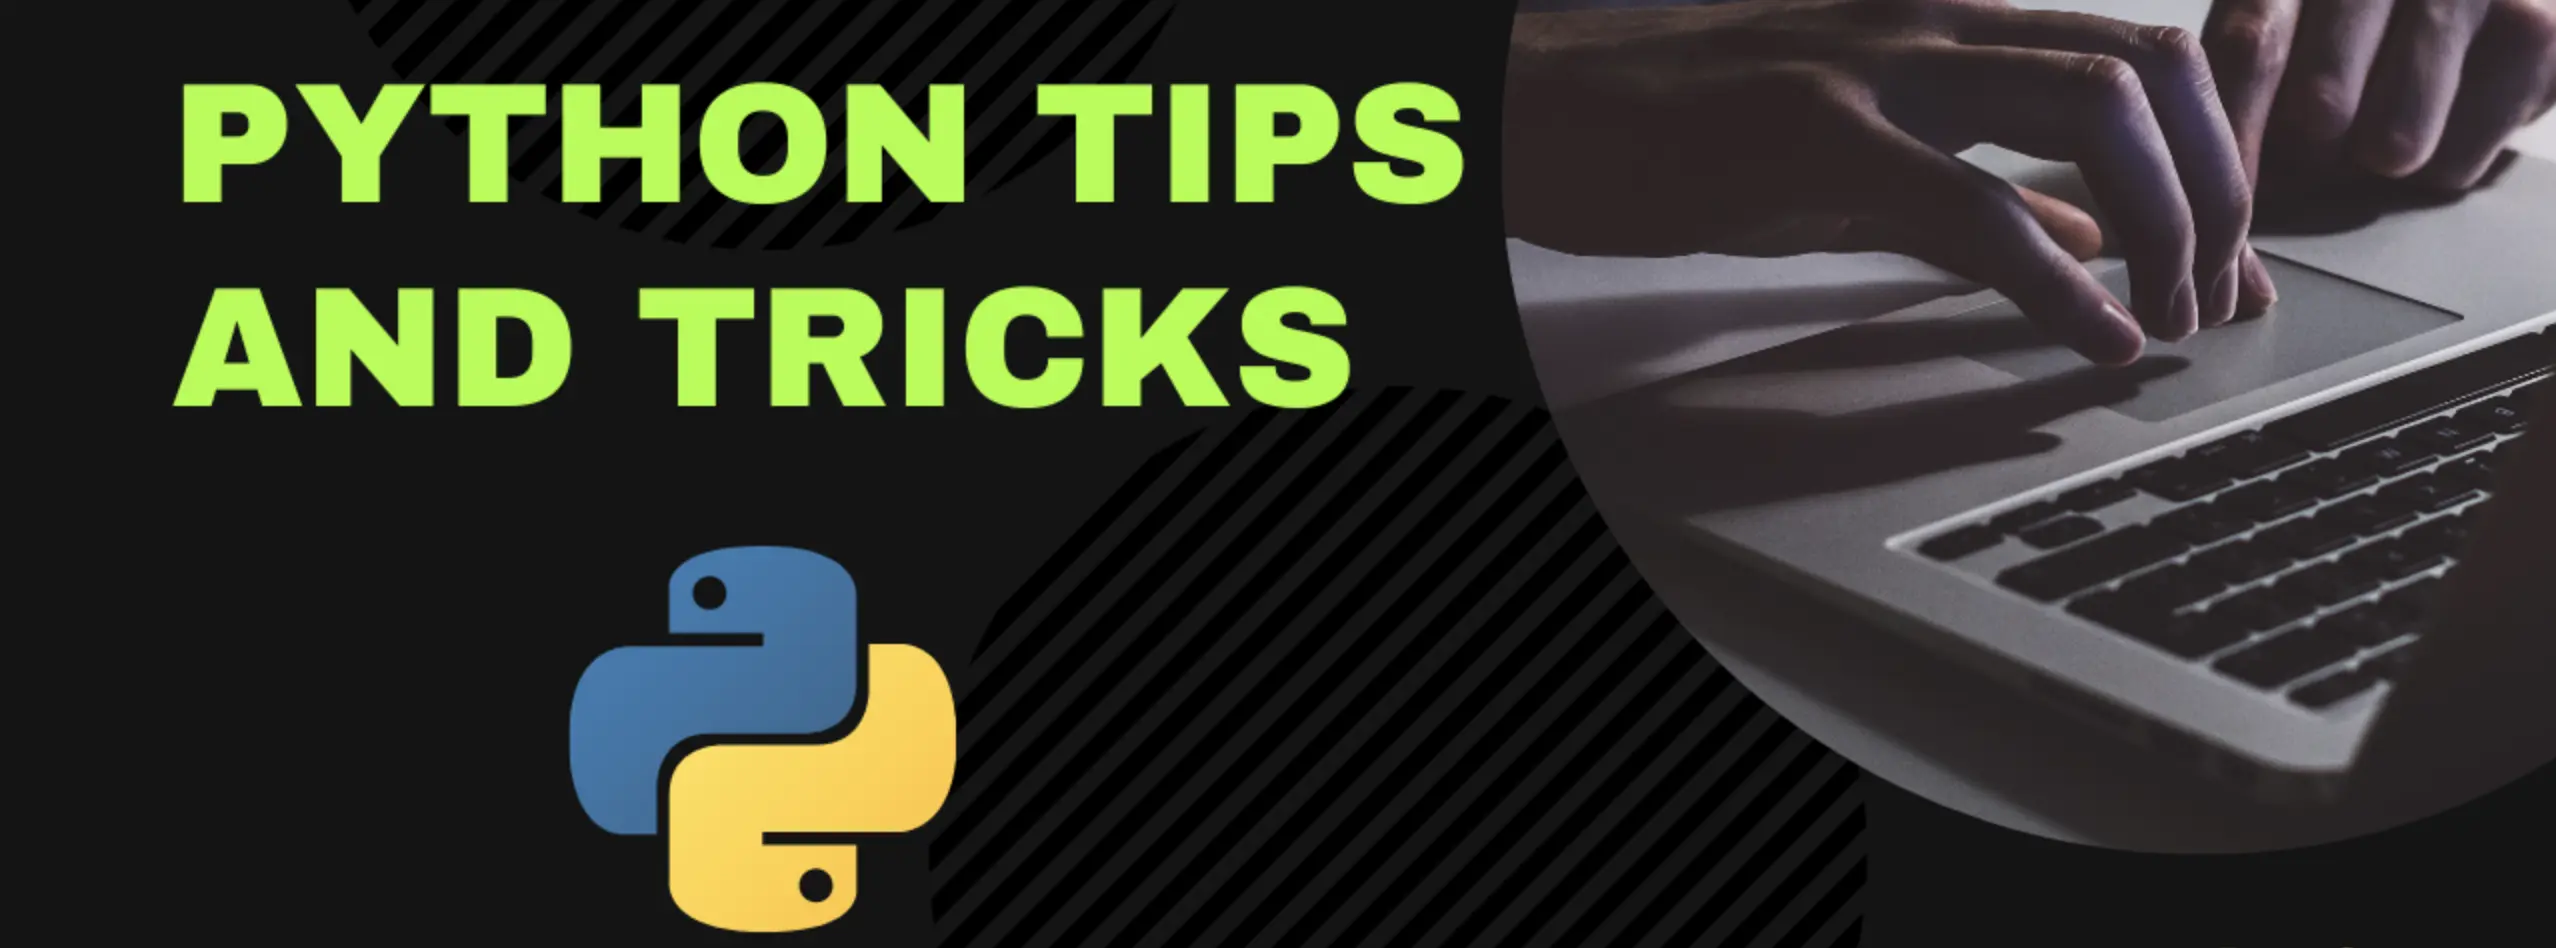 /posts/python-tips-and-tricks/python-tips-and-tricks.webp